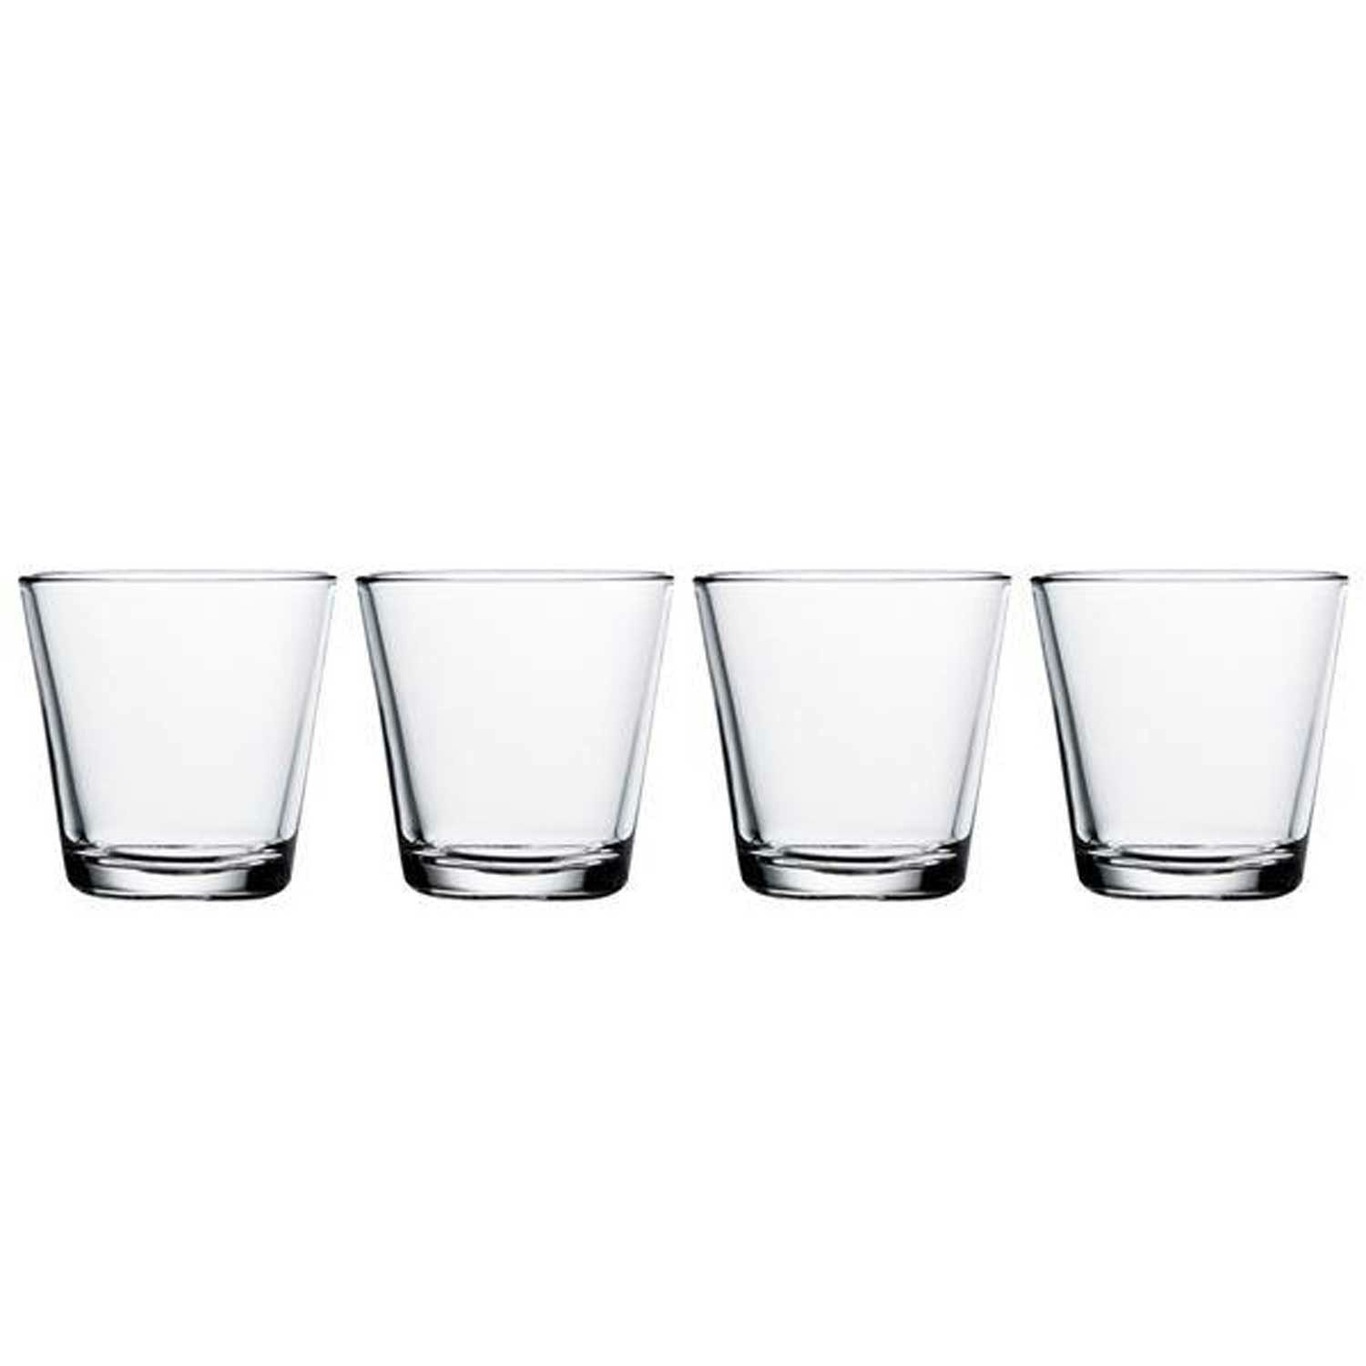 https://royaldesign.com/image/2/iittala-kartio-drinking-glasses-clear-4-pack-0?w=800&quality=80